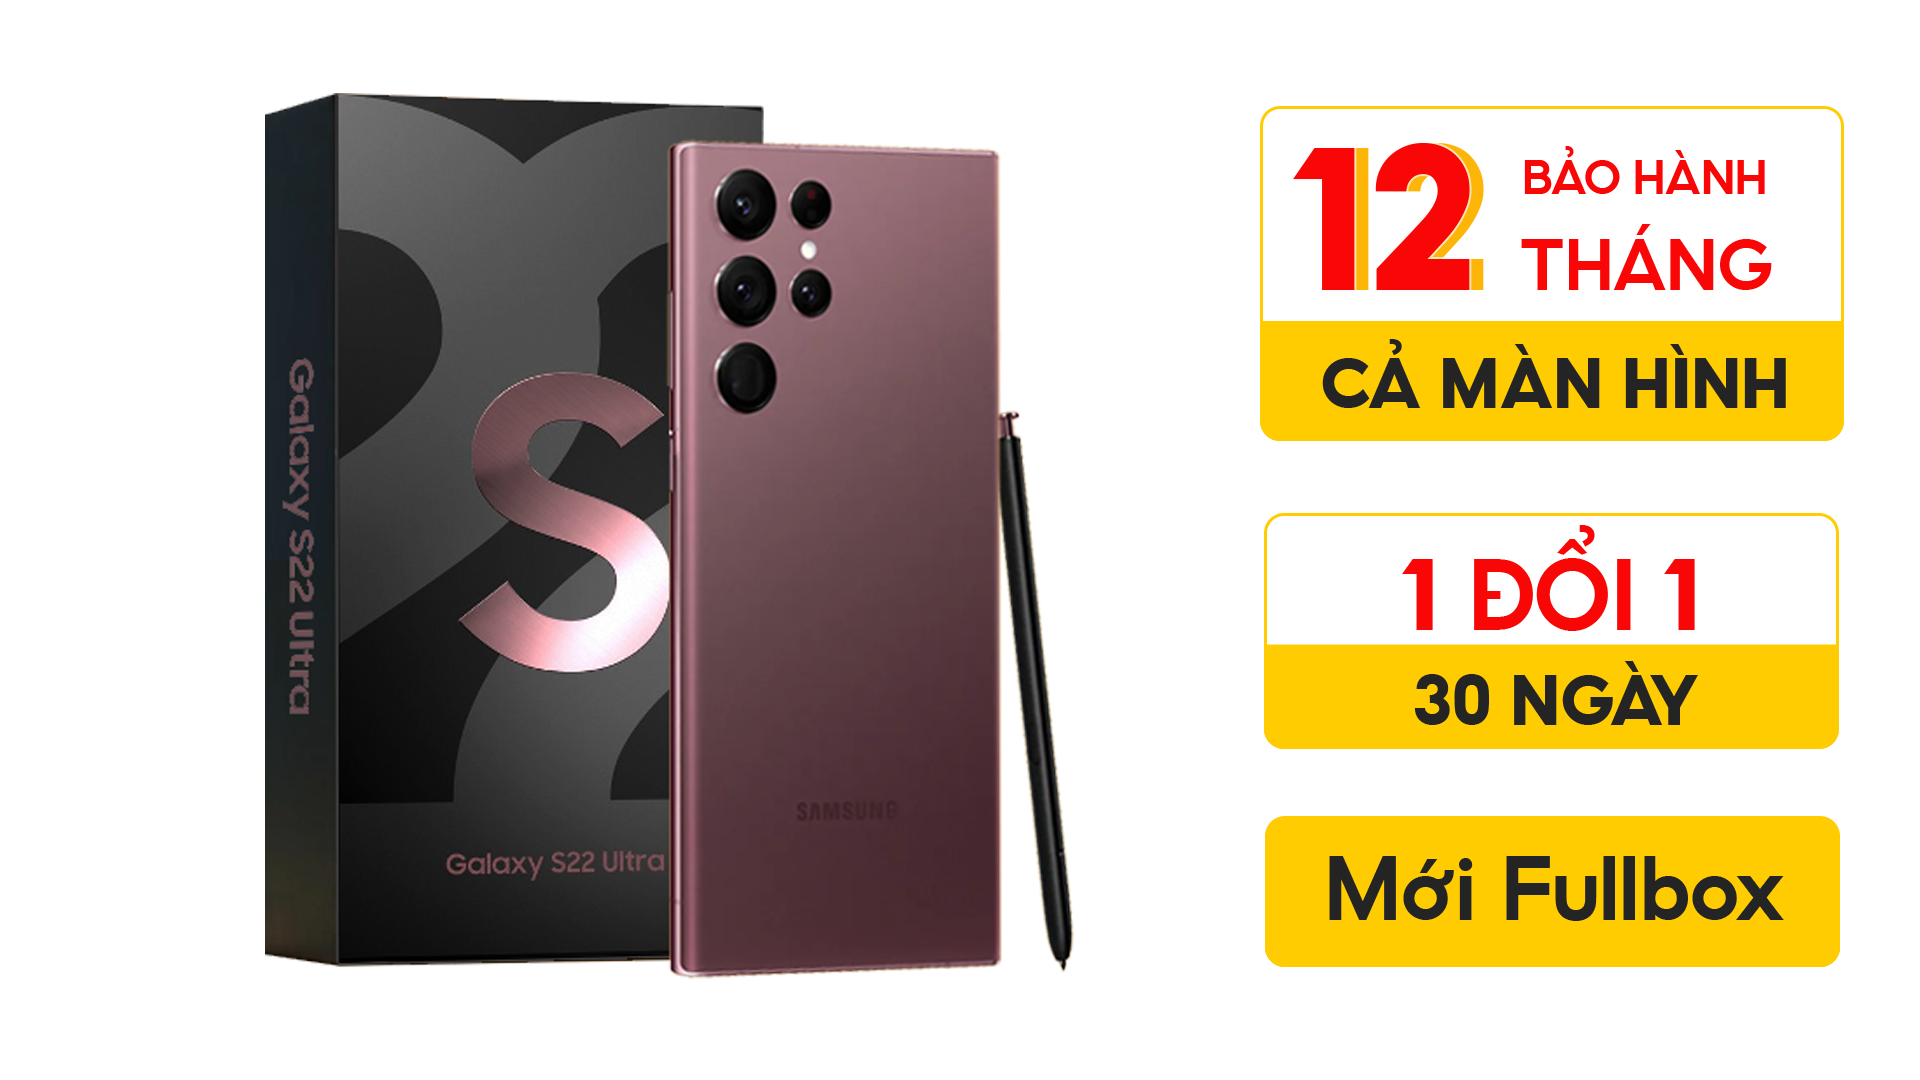 Samsung S22 Ultra 5G Mỹ 8G/128G - 2 Sim, Mới Fullbox